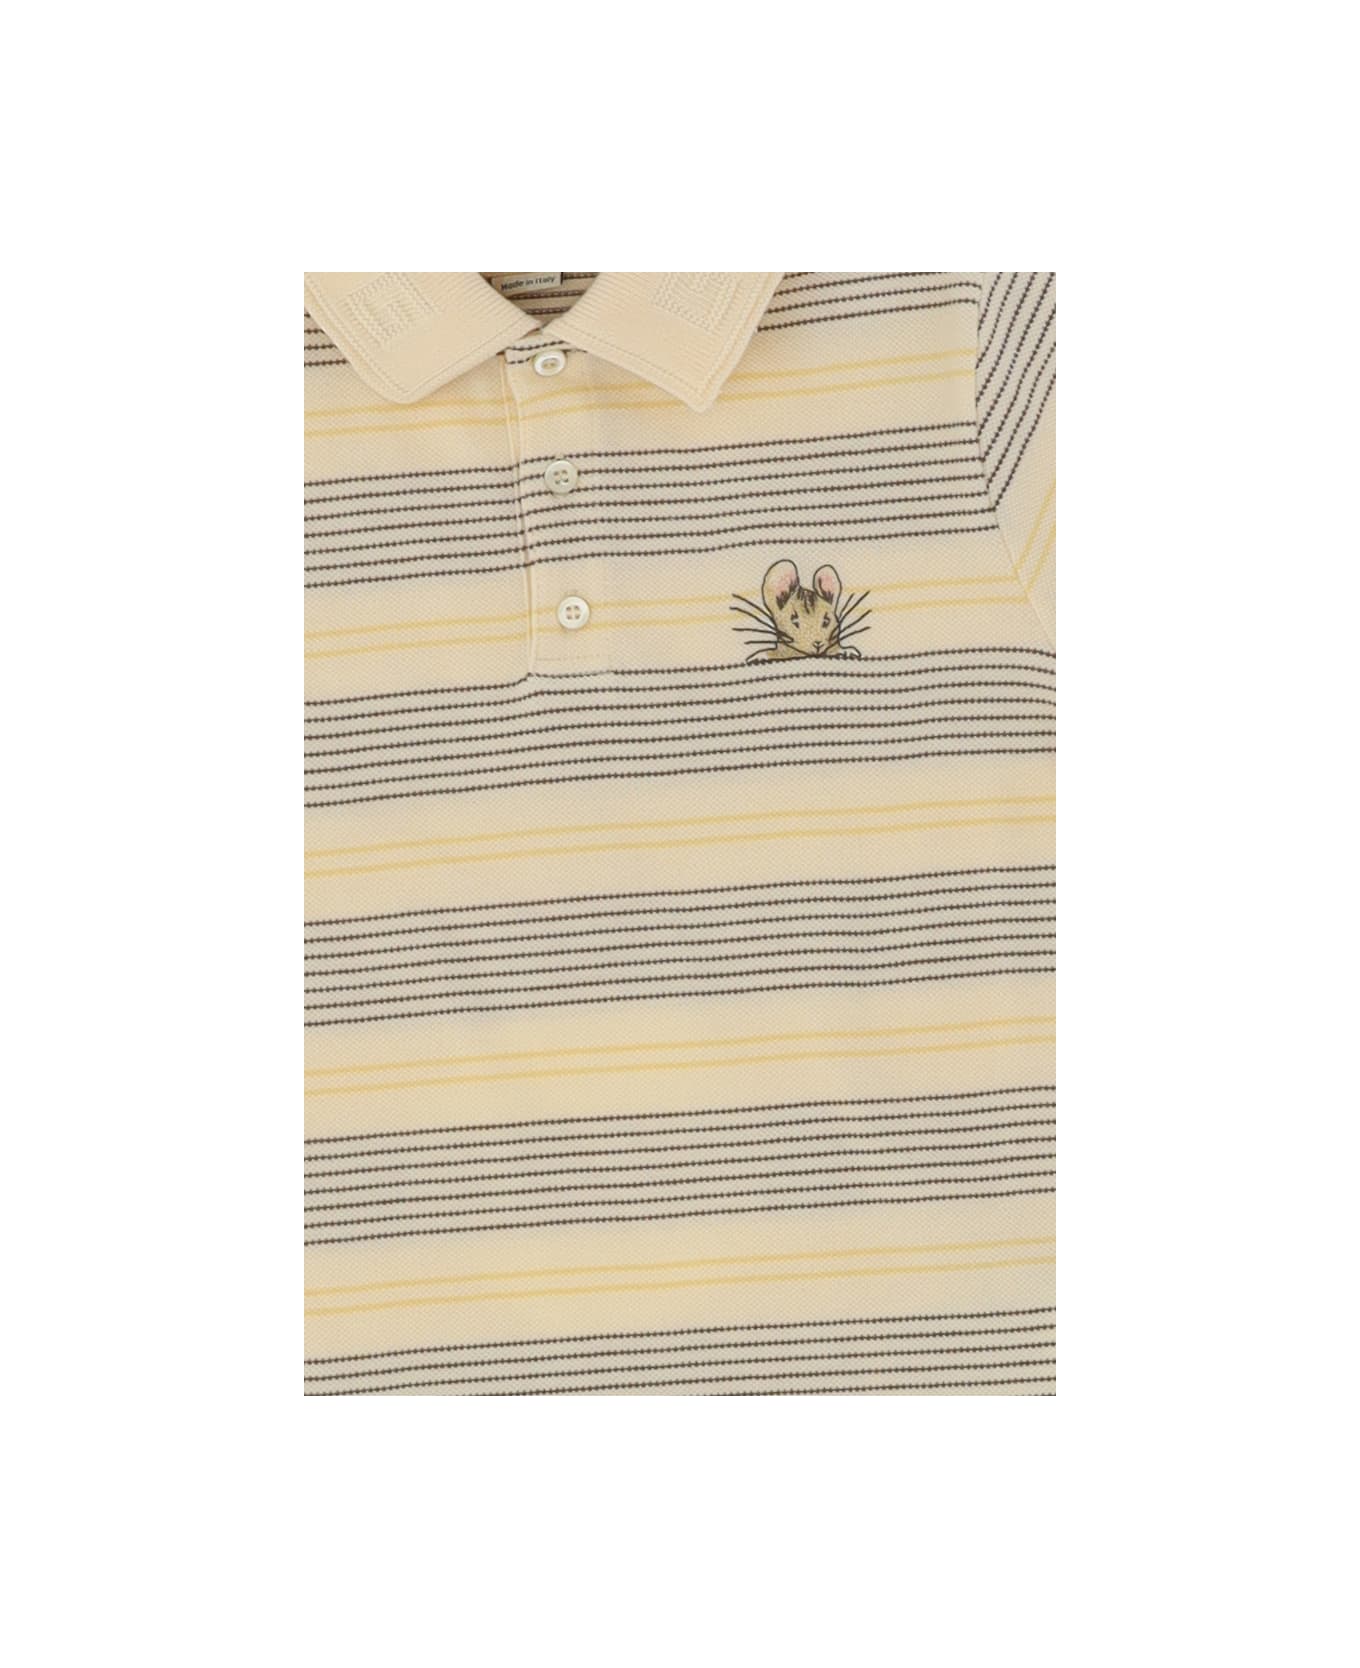 Gucci Polo Shirt For Boy - Yellow/brown